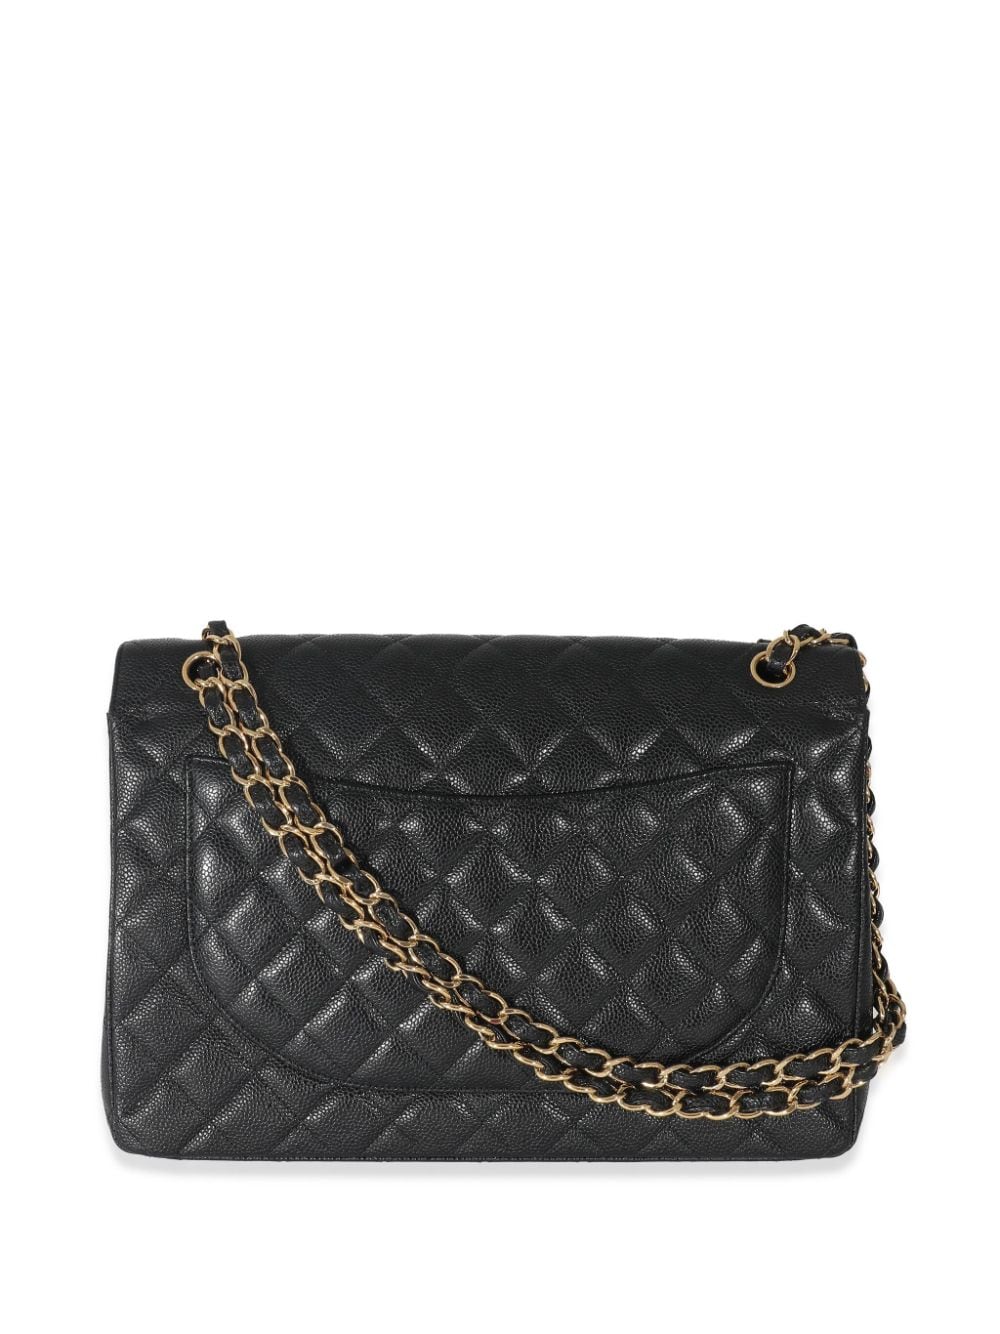 Pre-owned Chanel 2011 Large Double Flap Shoulder Bag In Black